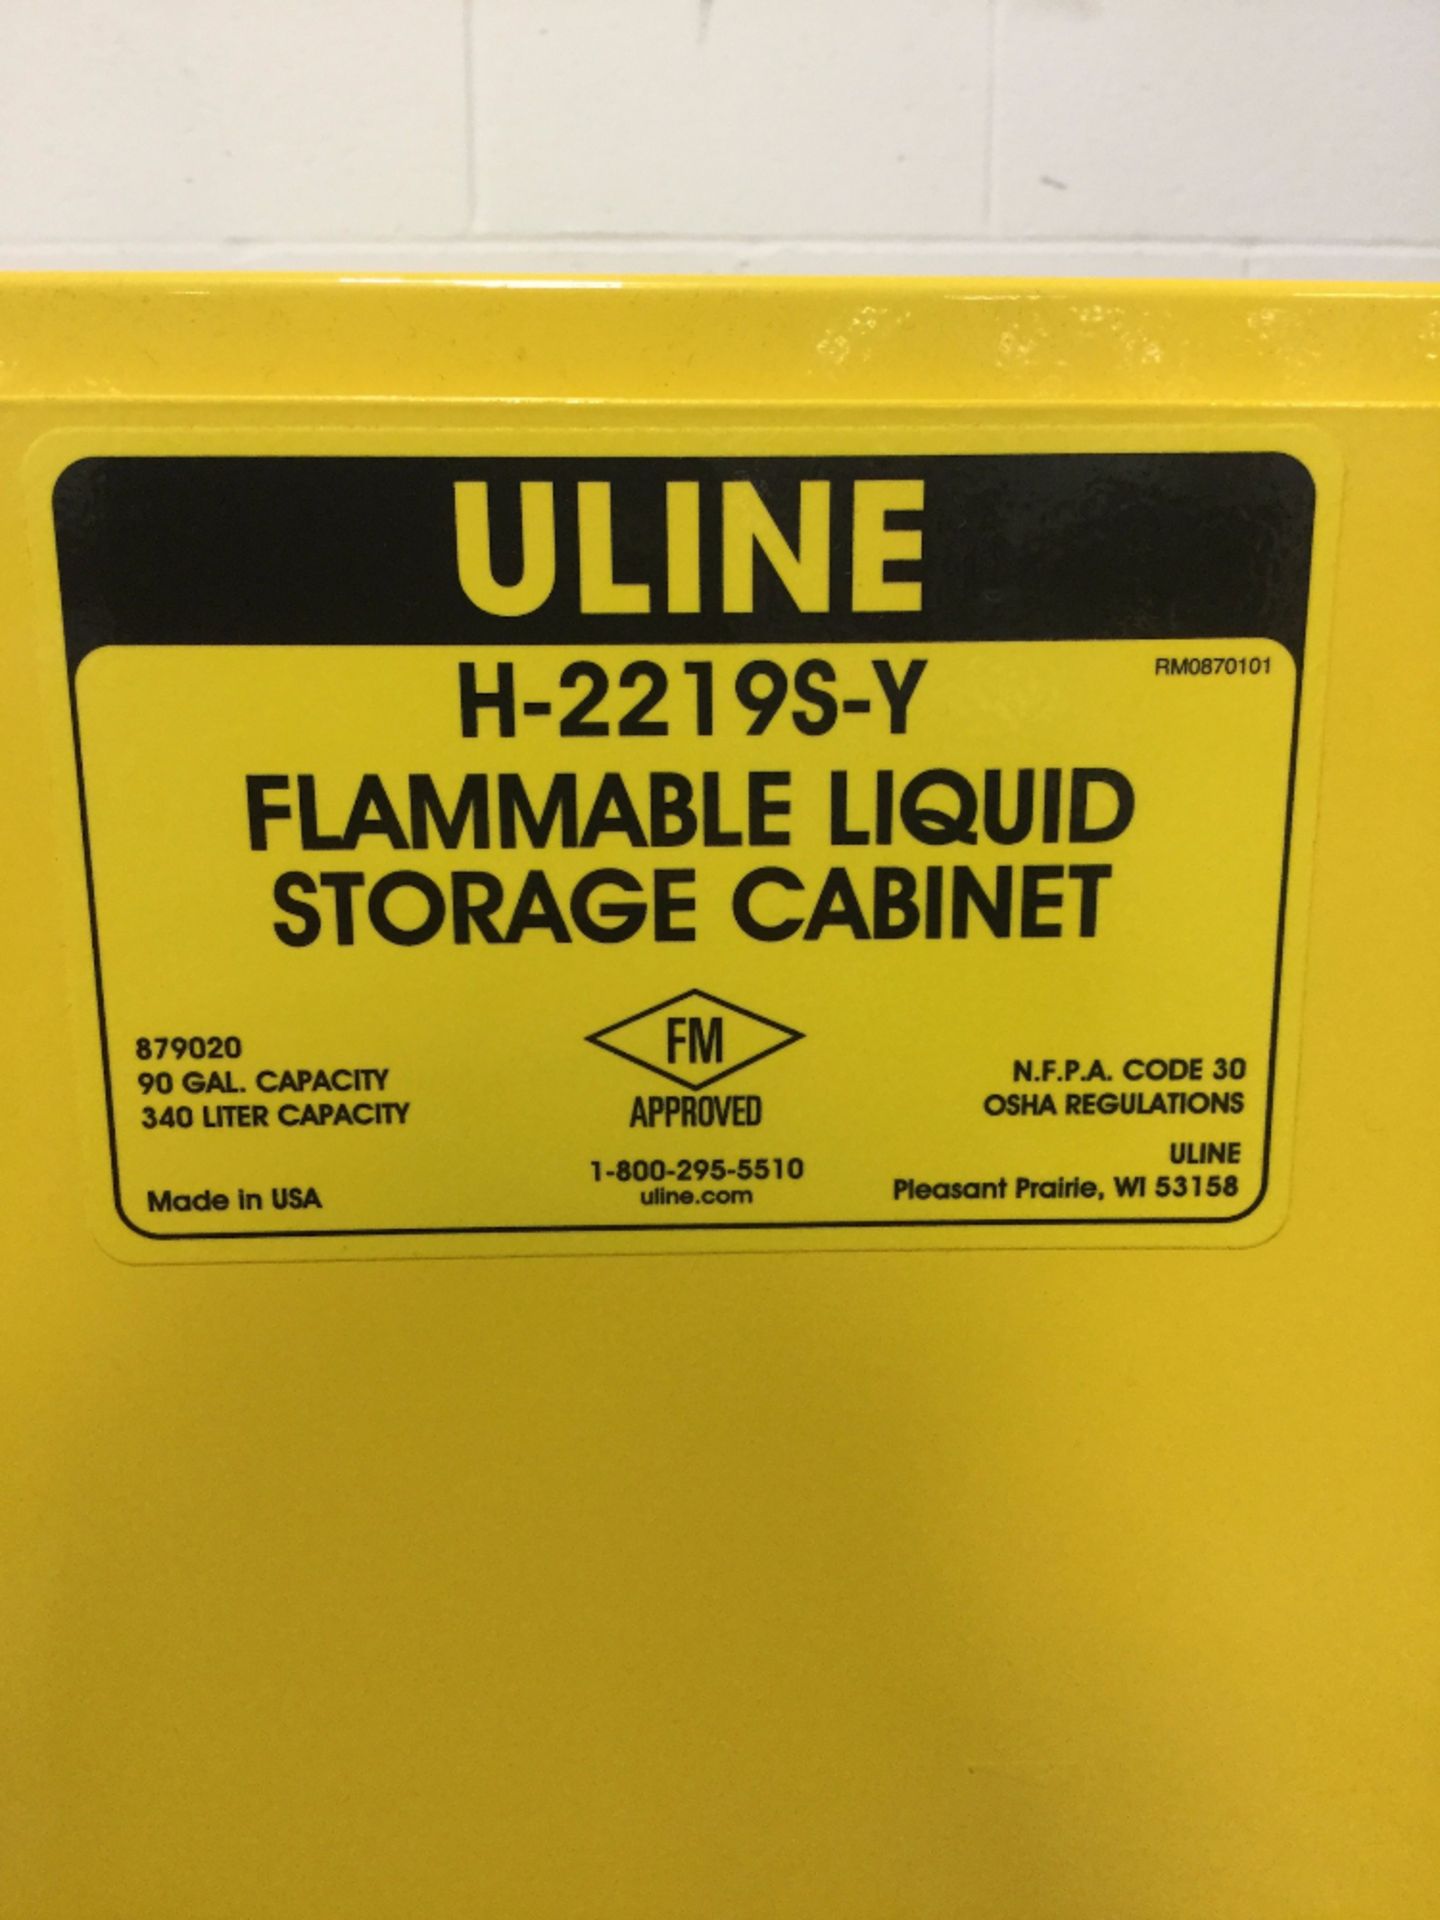 ULINE Standard Flammable Storage Cabinet - Image 2 of 3